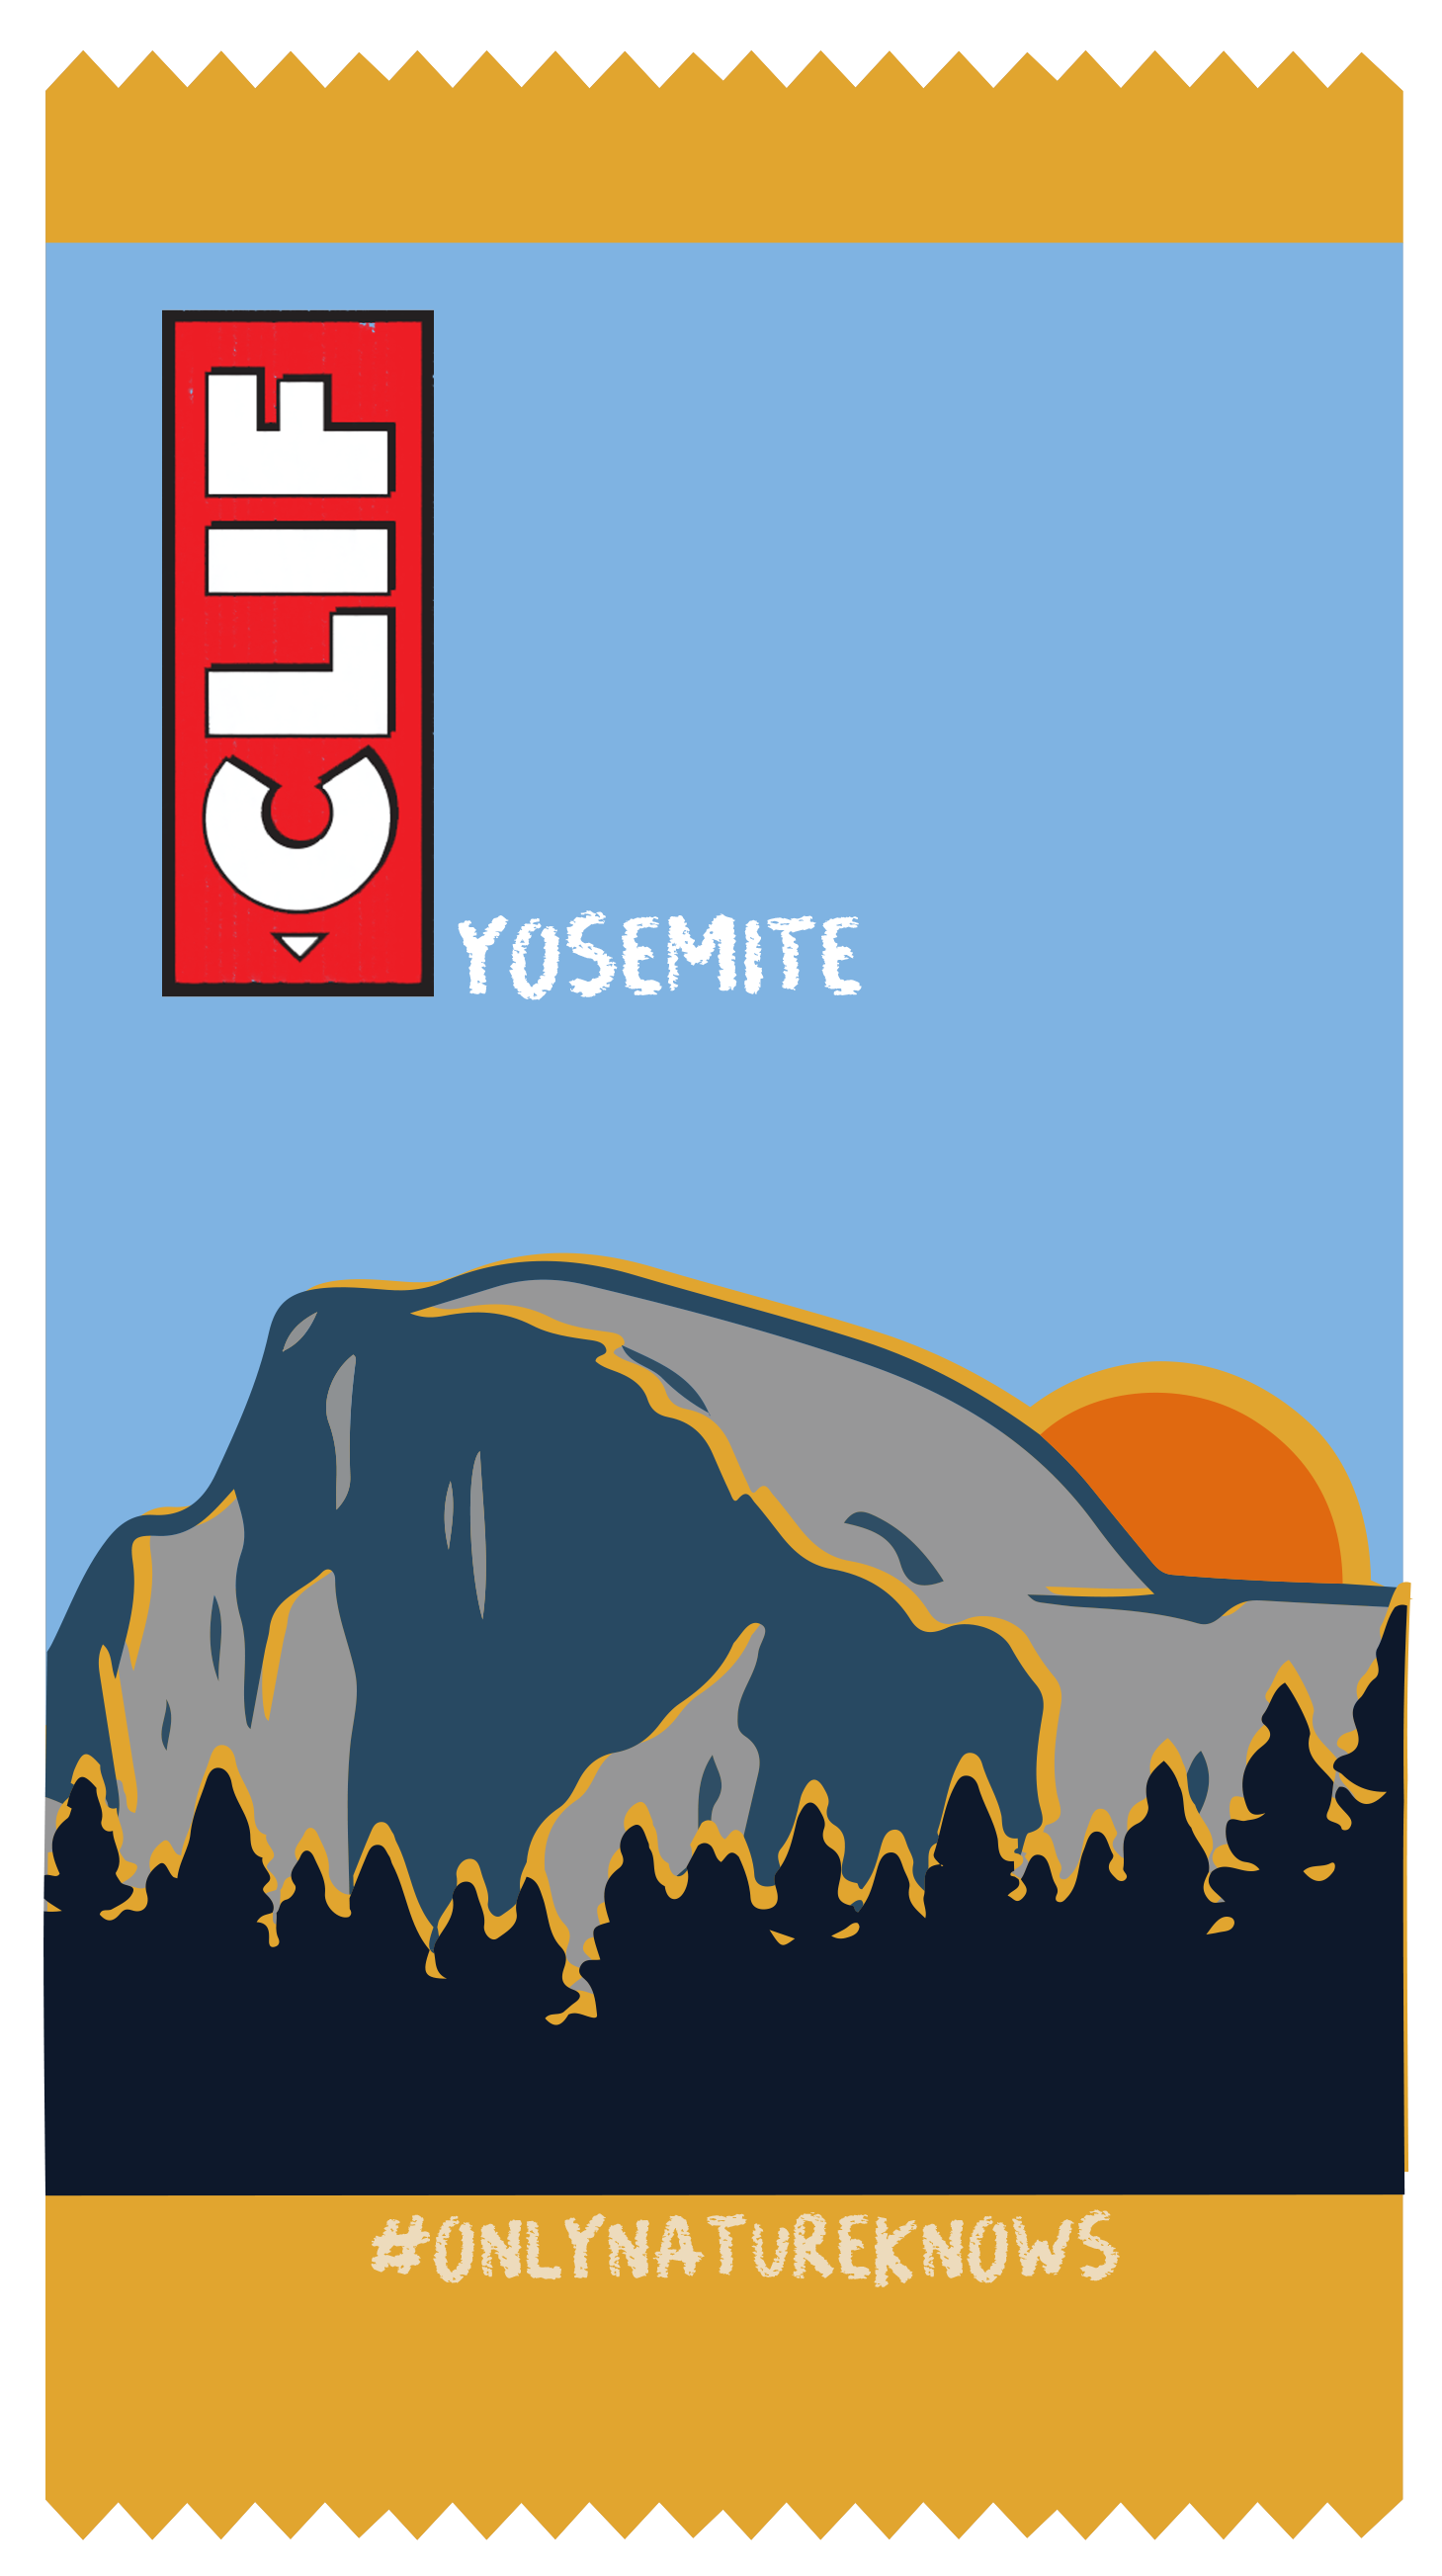 yosemite.png